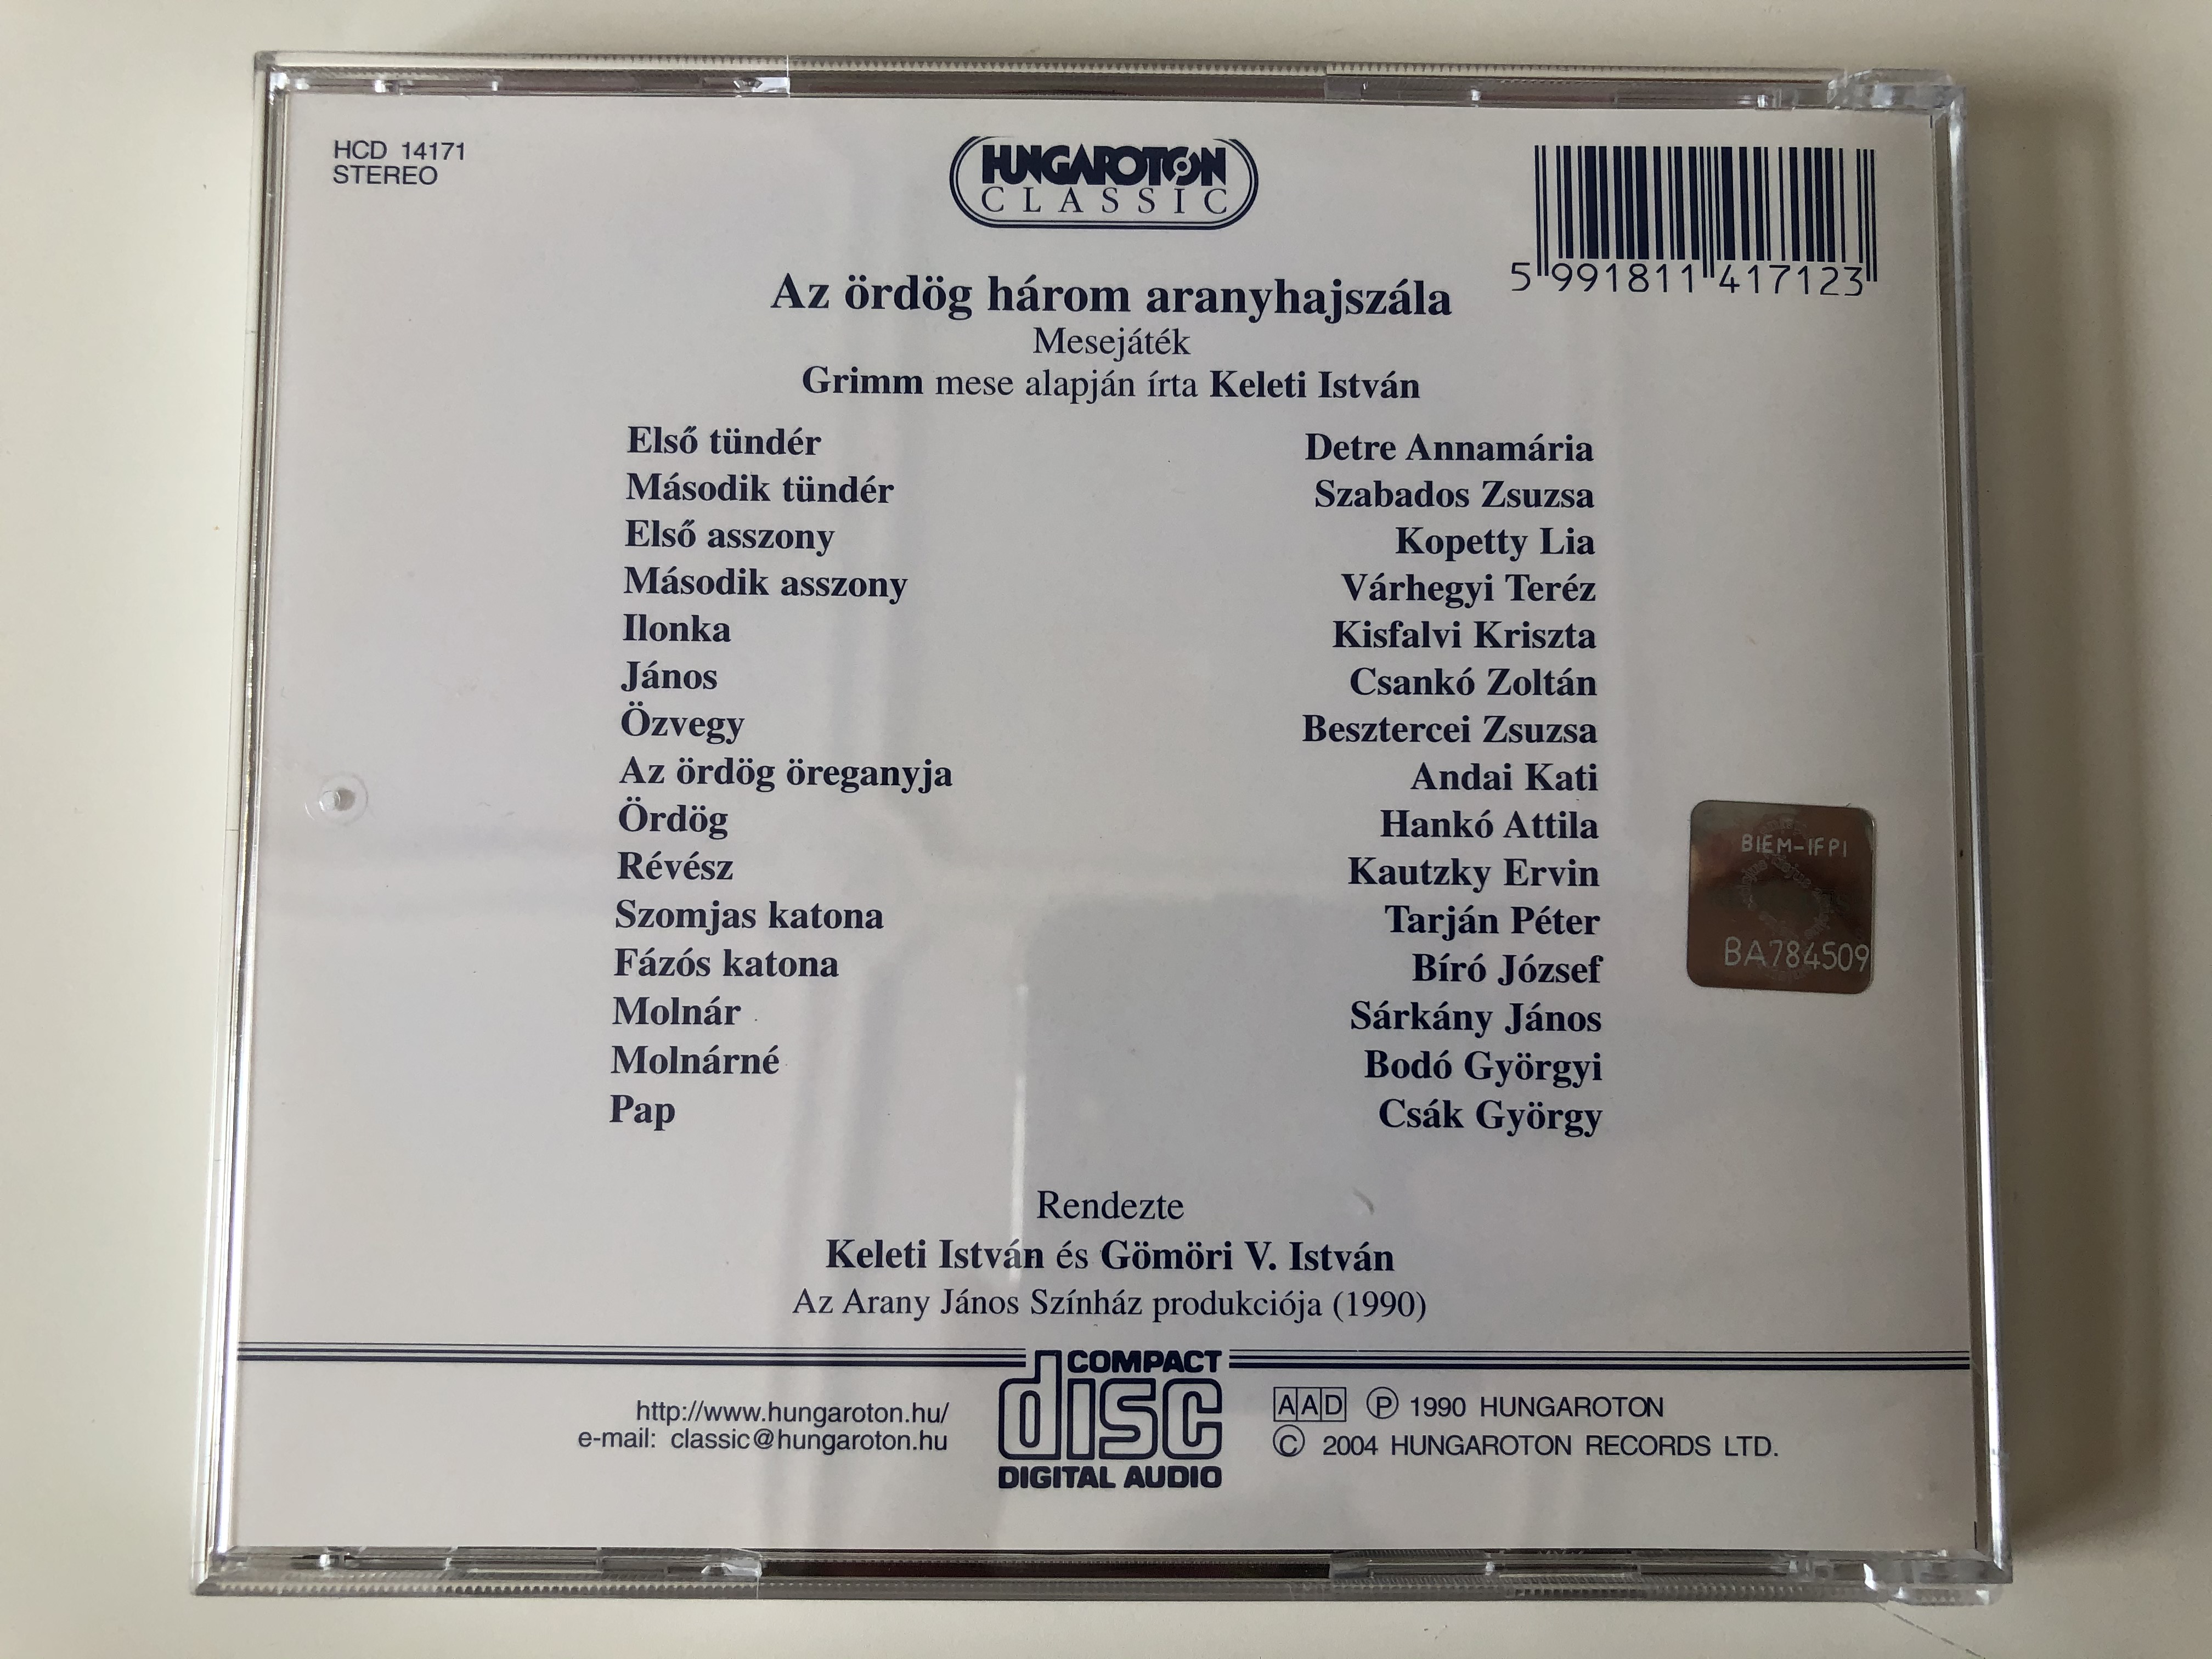 az-ordog-harom-aranyhajszala-mesejatek-hungaroton-classic-audio-cd-1990-stereo-hcd-14171-4-.jpg